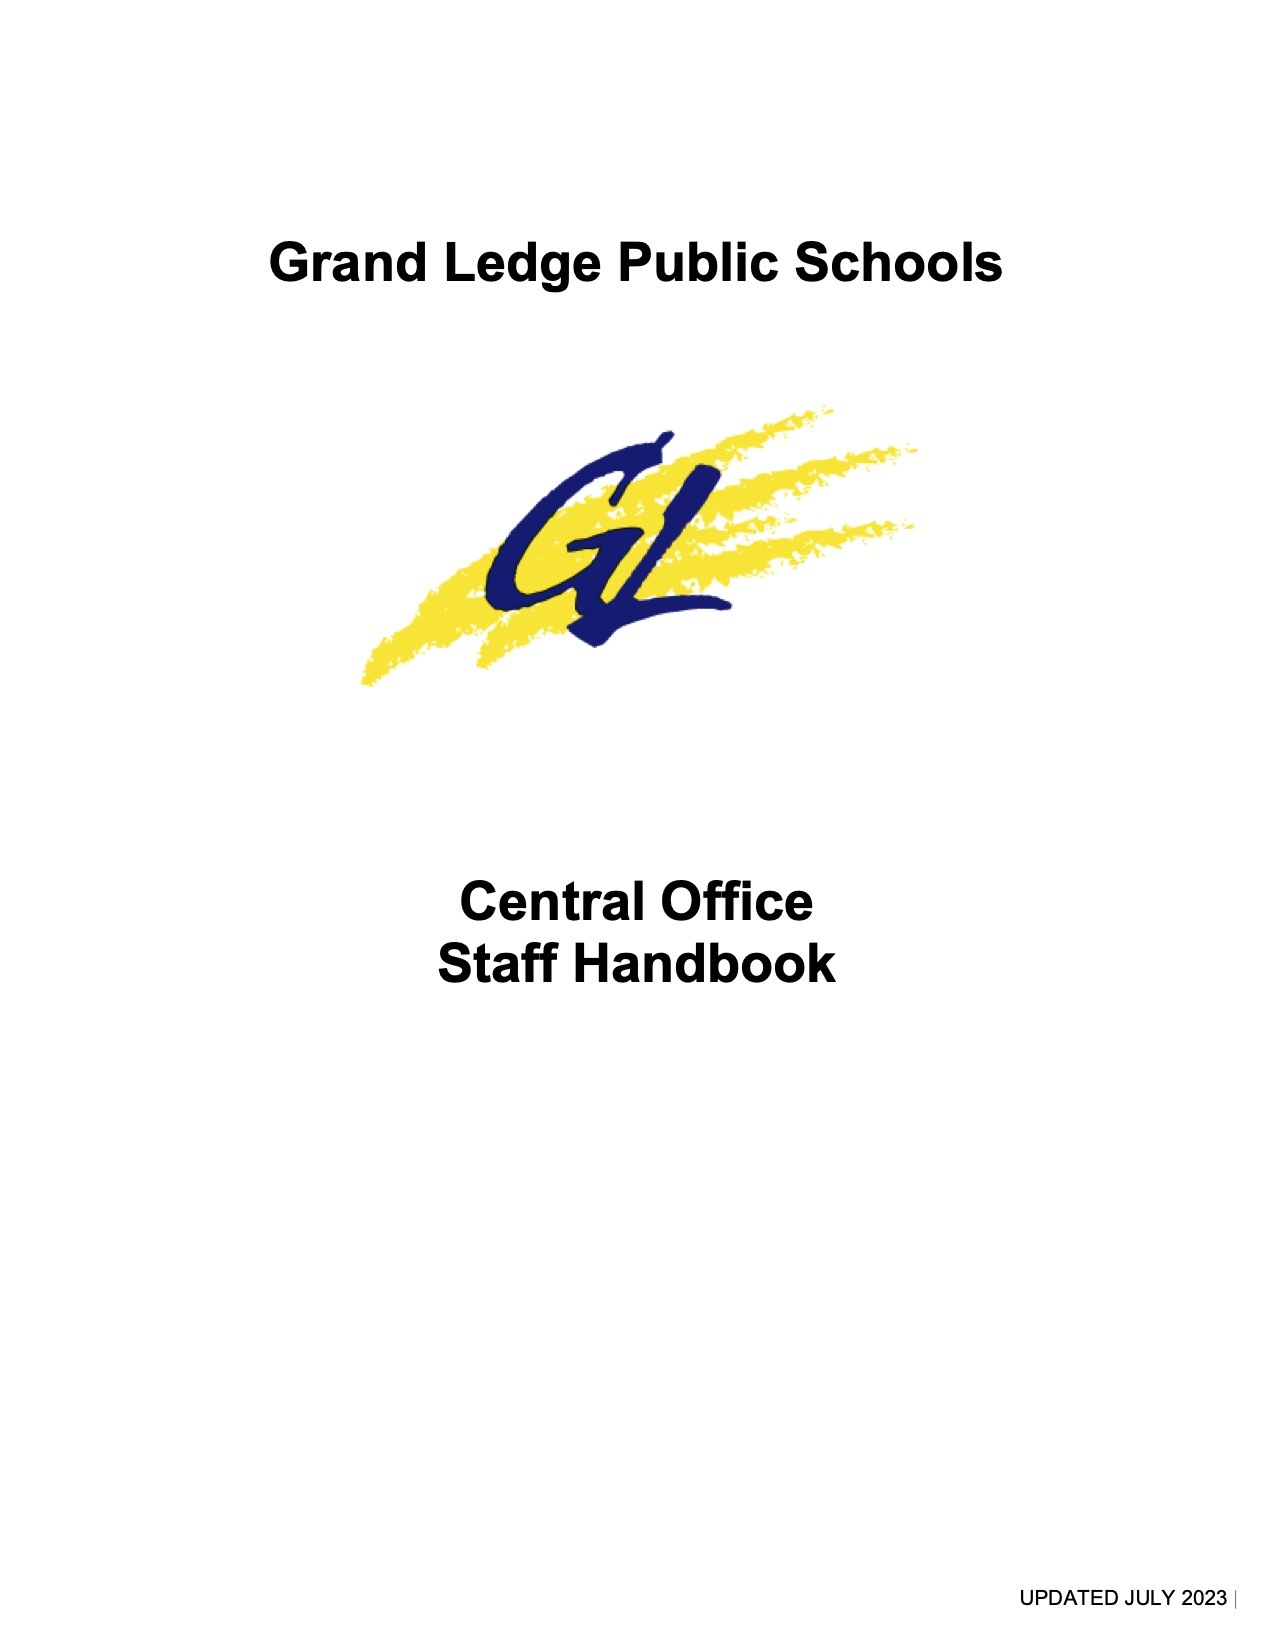 Central Office Staff Handbook